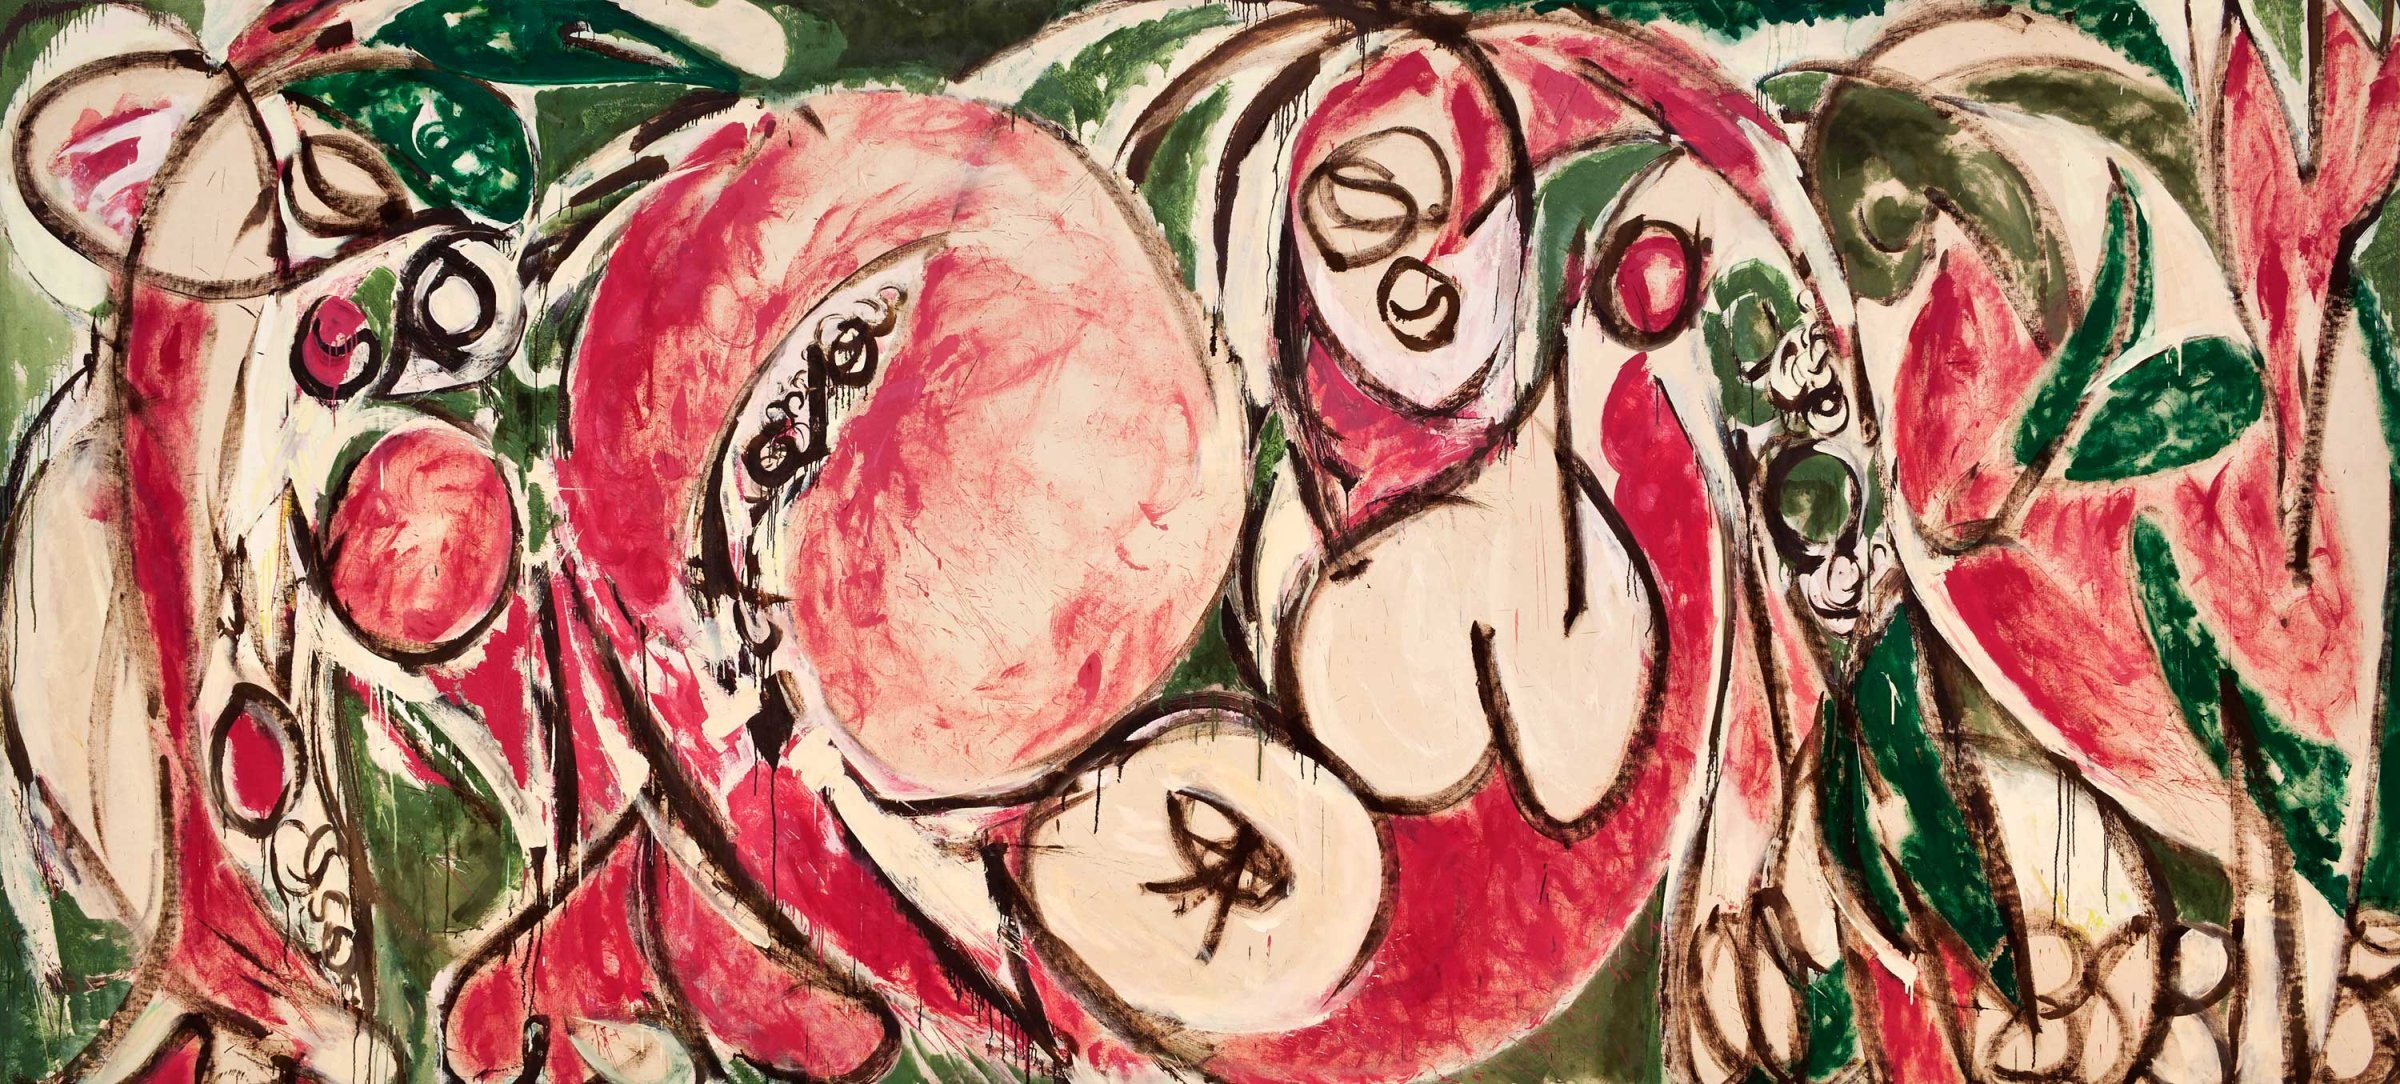 abstract-expressionism-lee-krasner-mary-abbott-joan-mitchell-elaine-de-kooning-denver-art-museum-painting